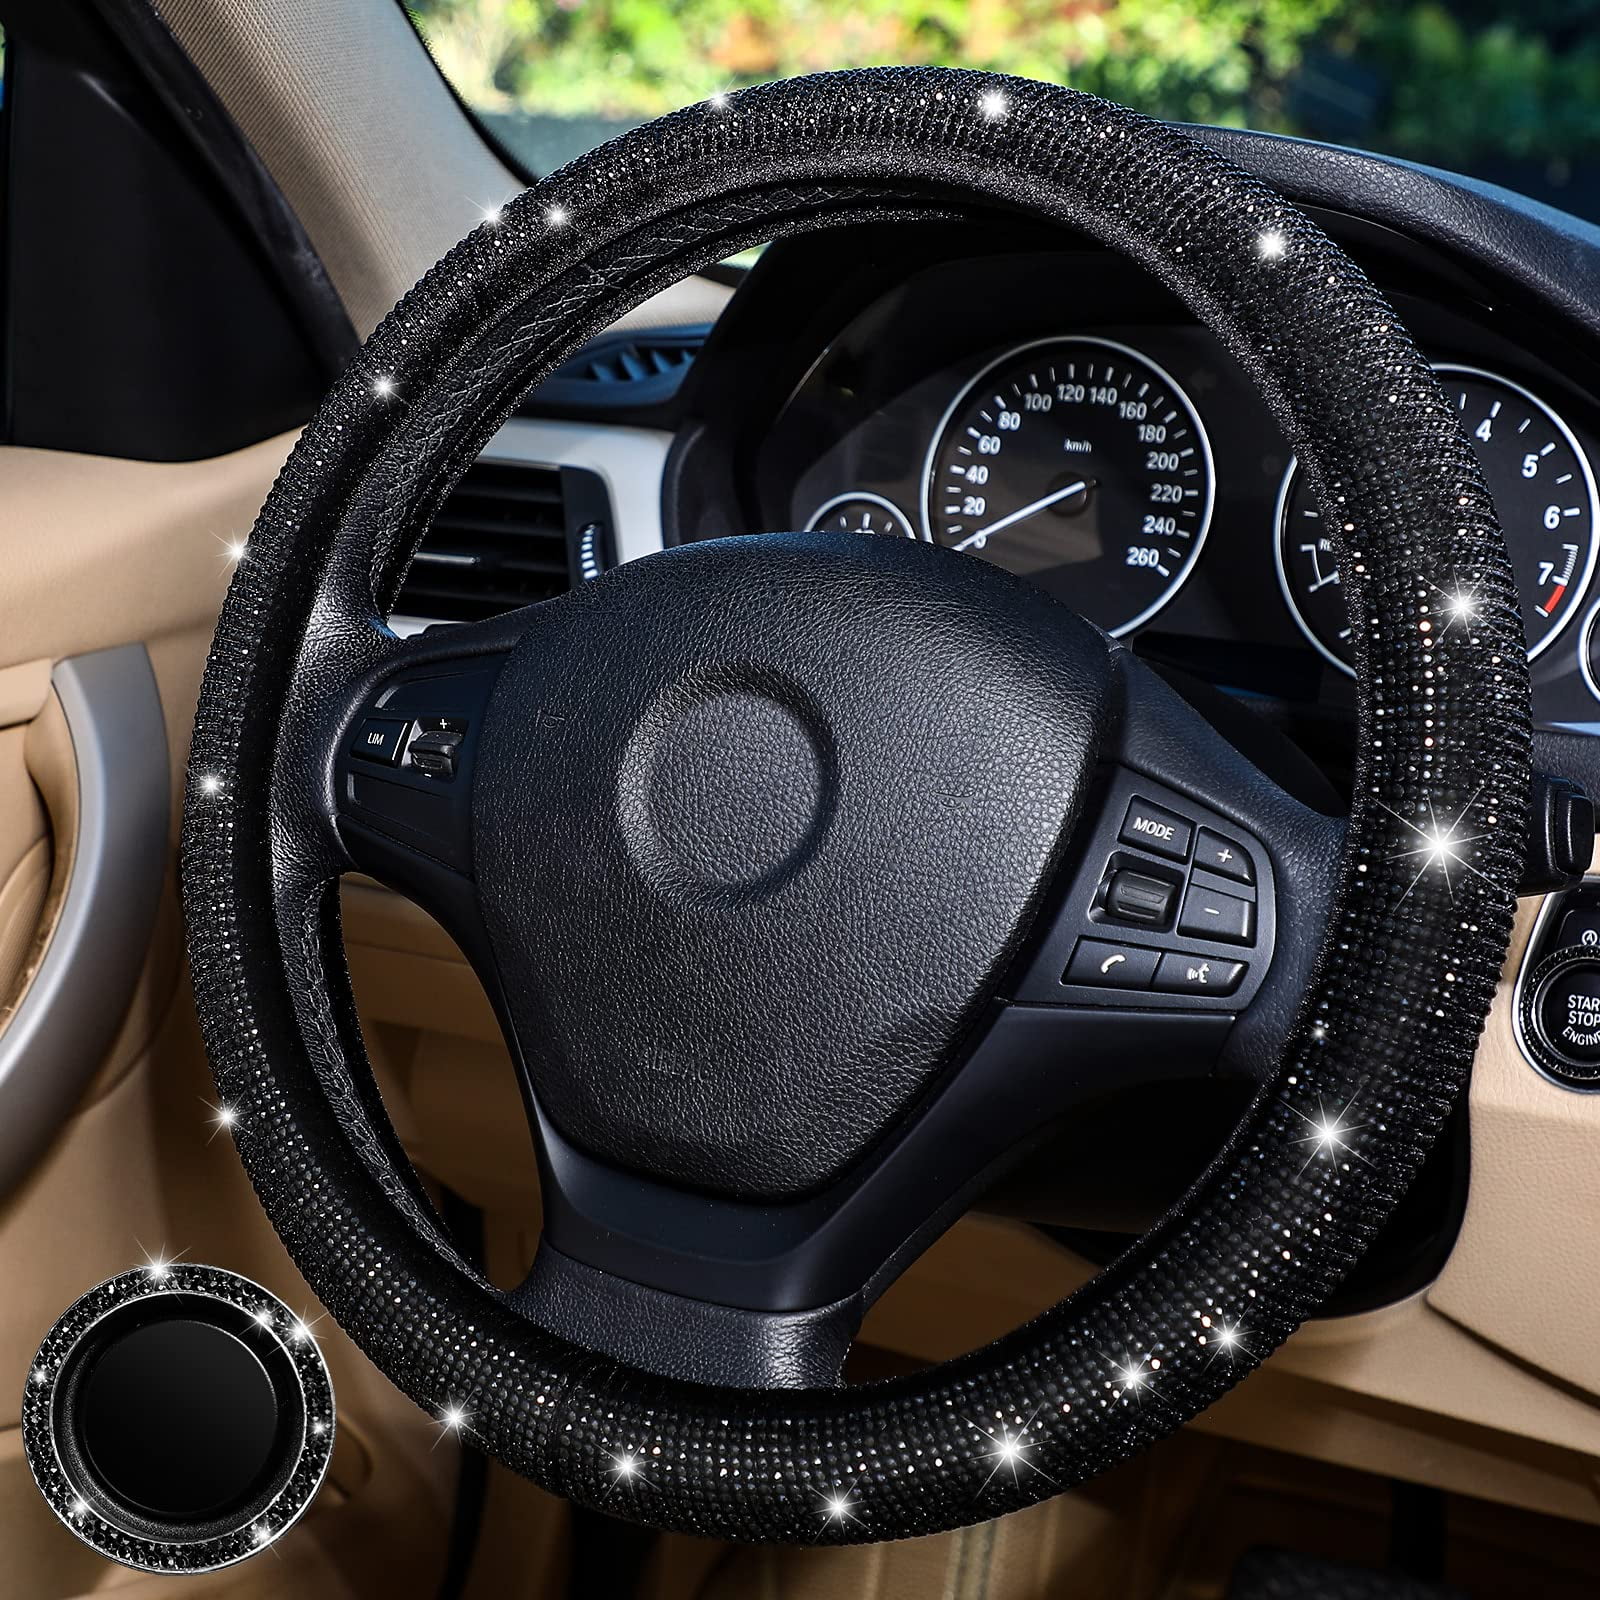  26 Pcs 𝐁𝐥𝐢𝐧𝐠 𝐂𝐚𝐫 𝐀𝐜𝐜𝐞𝐬𝐬𝐨𝐫𝐢𝐞𝐬 𝐒𝐞𝐭 𝐟𝐨𝐫  𝐖𝐨𝐦𝐞𝐧 𝐆𝐢𝐫𝐥, Diamond Steering Wheel Cover Universal Fit 15 Inch,  Bling Car Phone Holder Mount, Car 